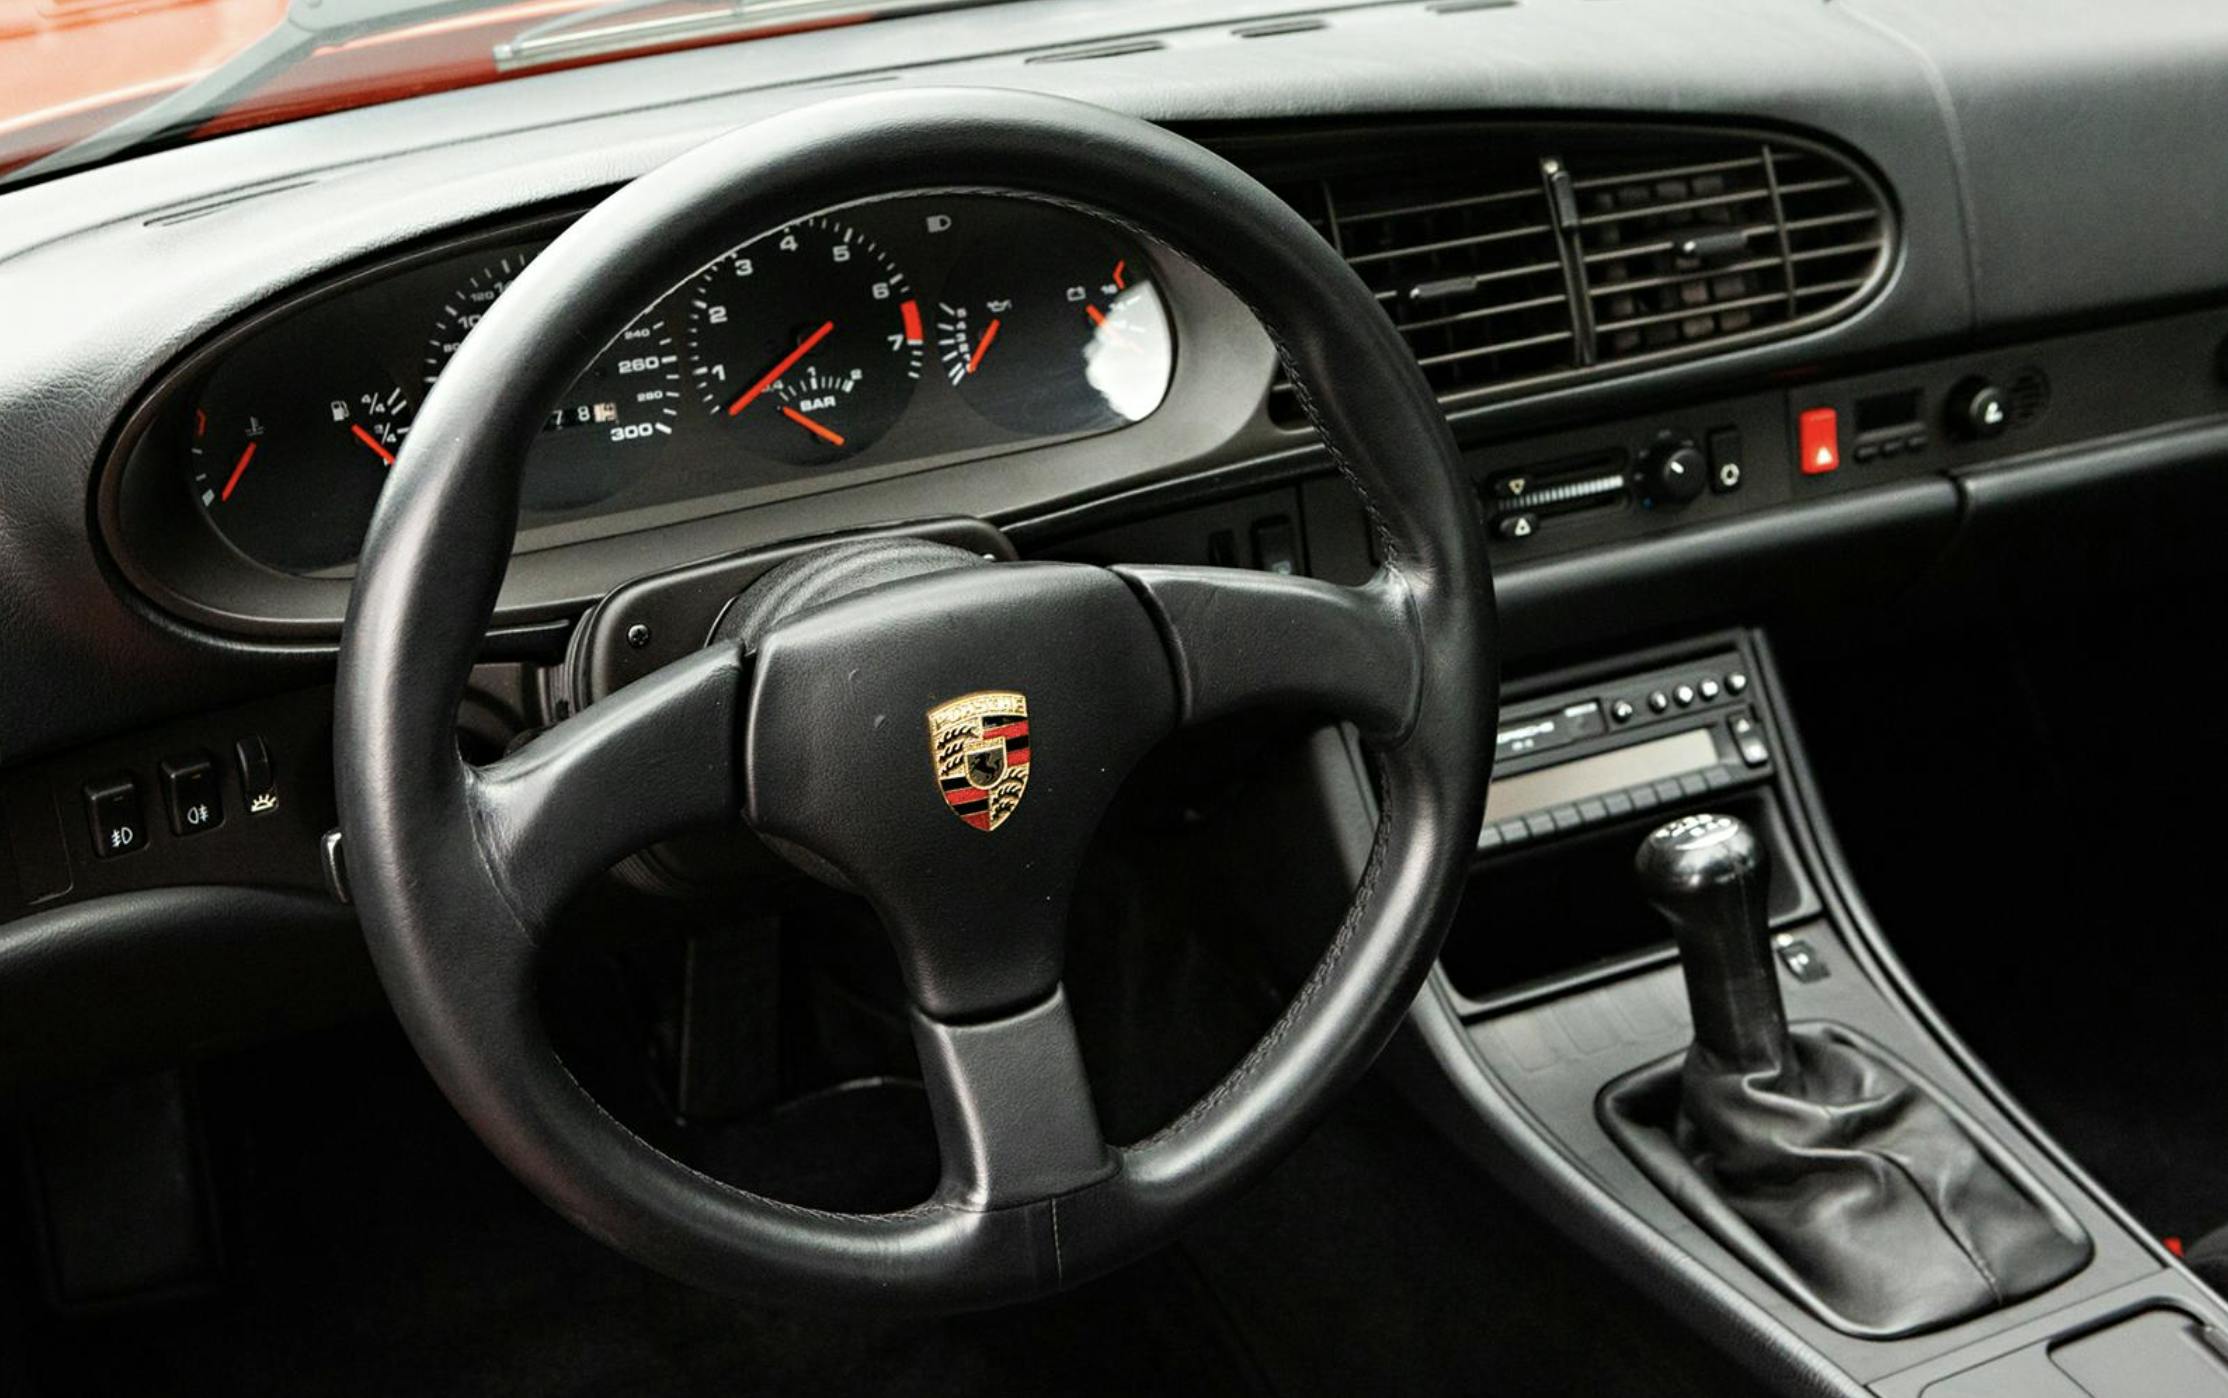 Porsche 968 Turbo S interior